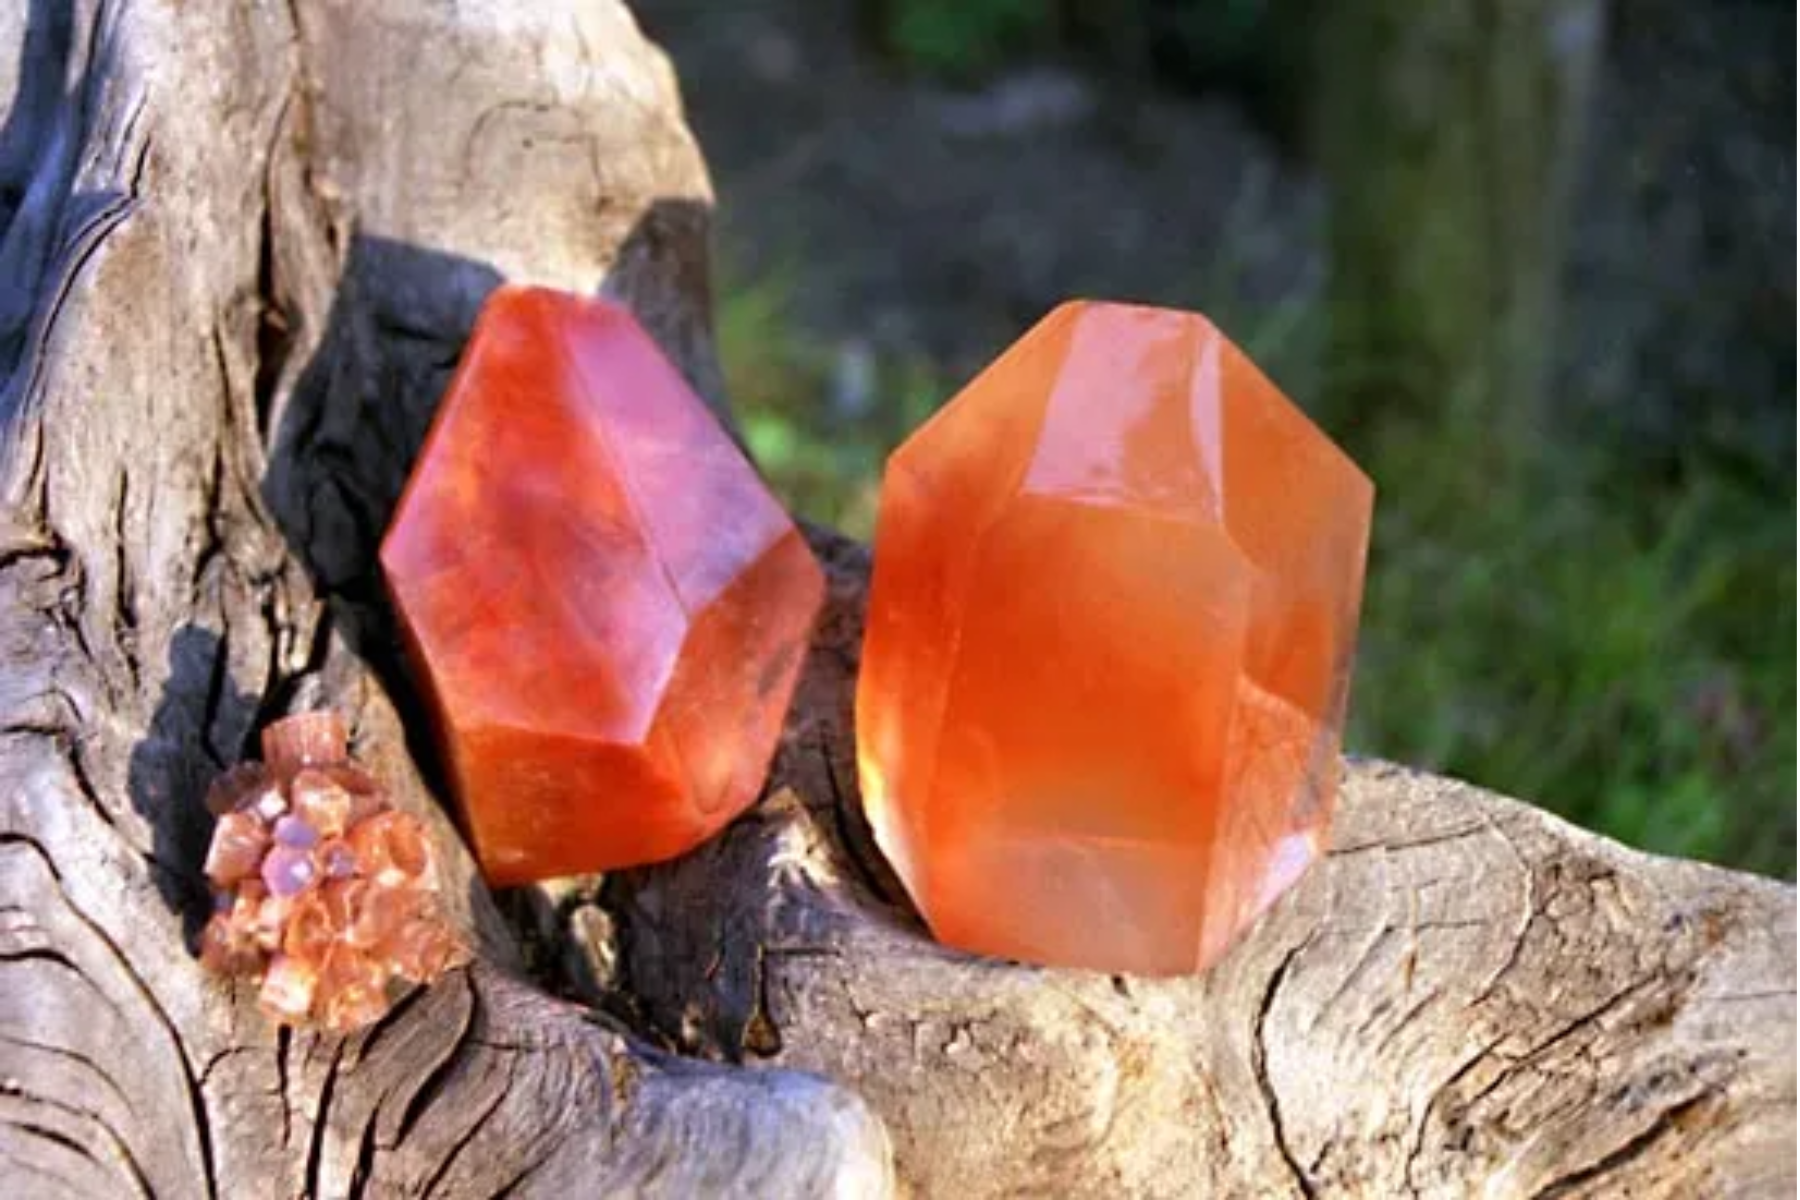 Two massive orange carnelian gemstones rest on a large tree branch